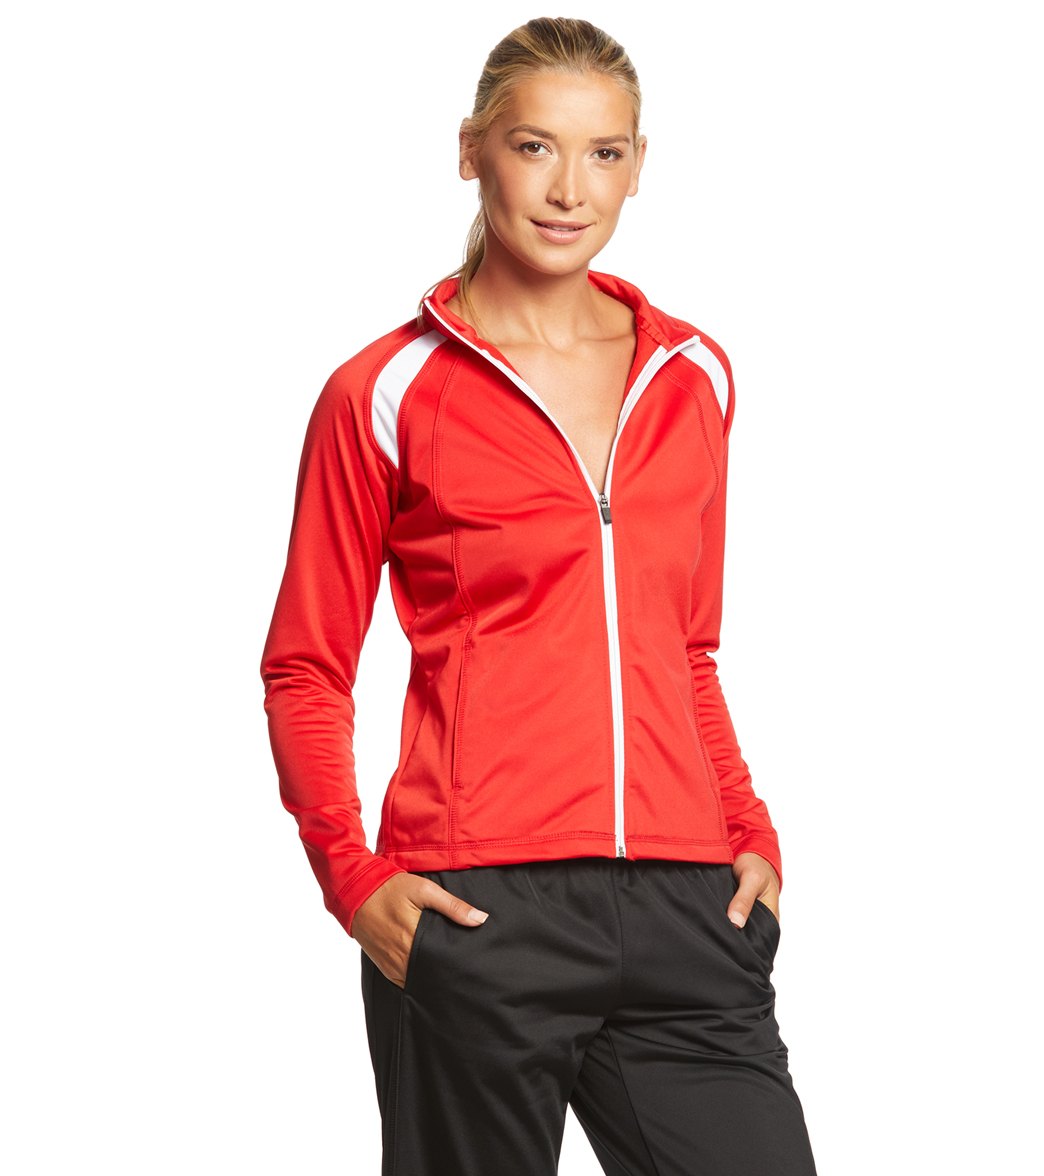 Details about  / Sport-Tek Womens Tricot Full Zip Pocket Track Jacket M-LST90